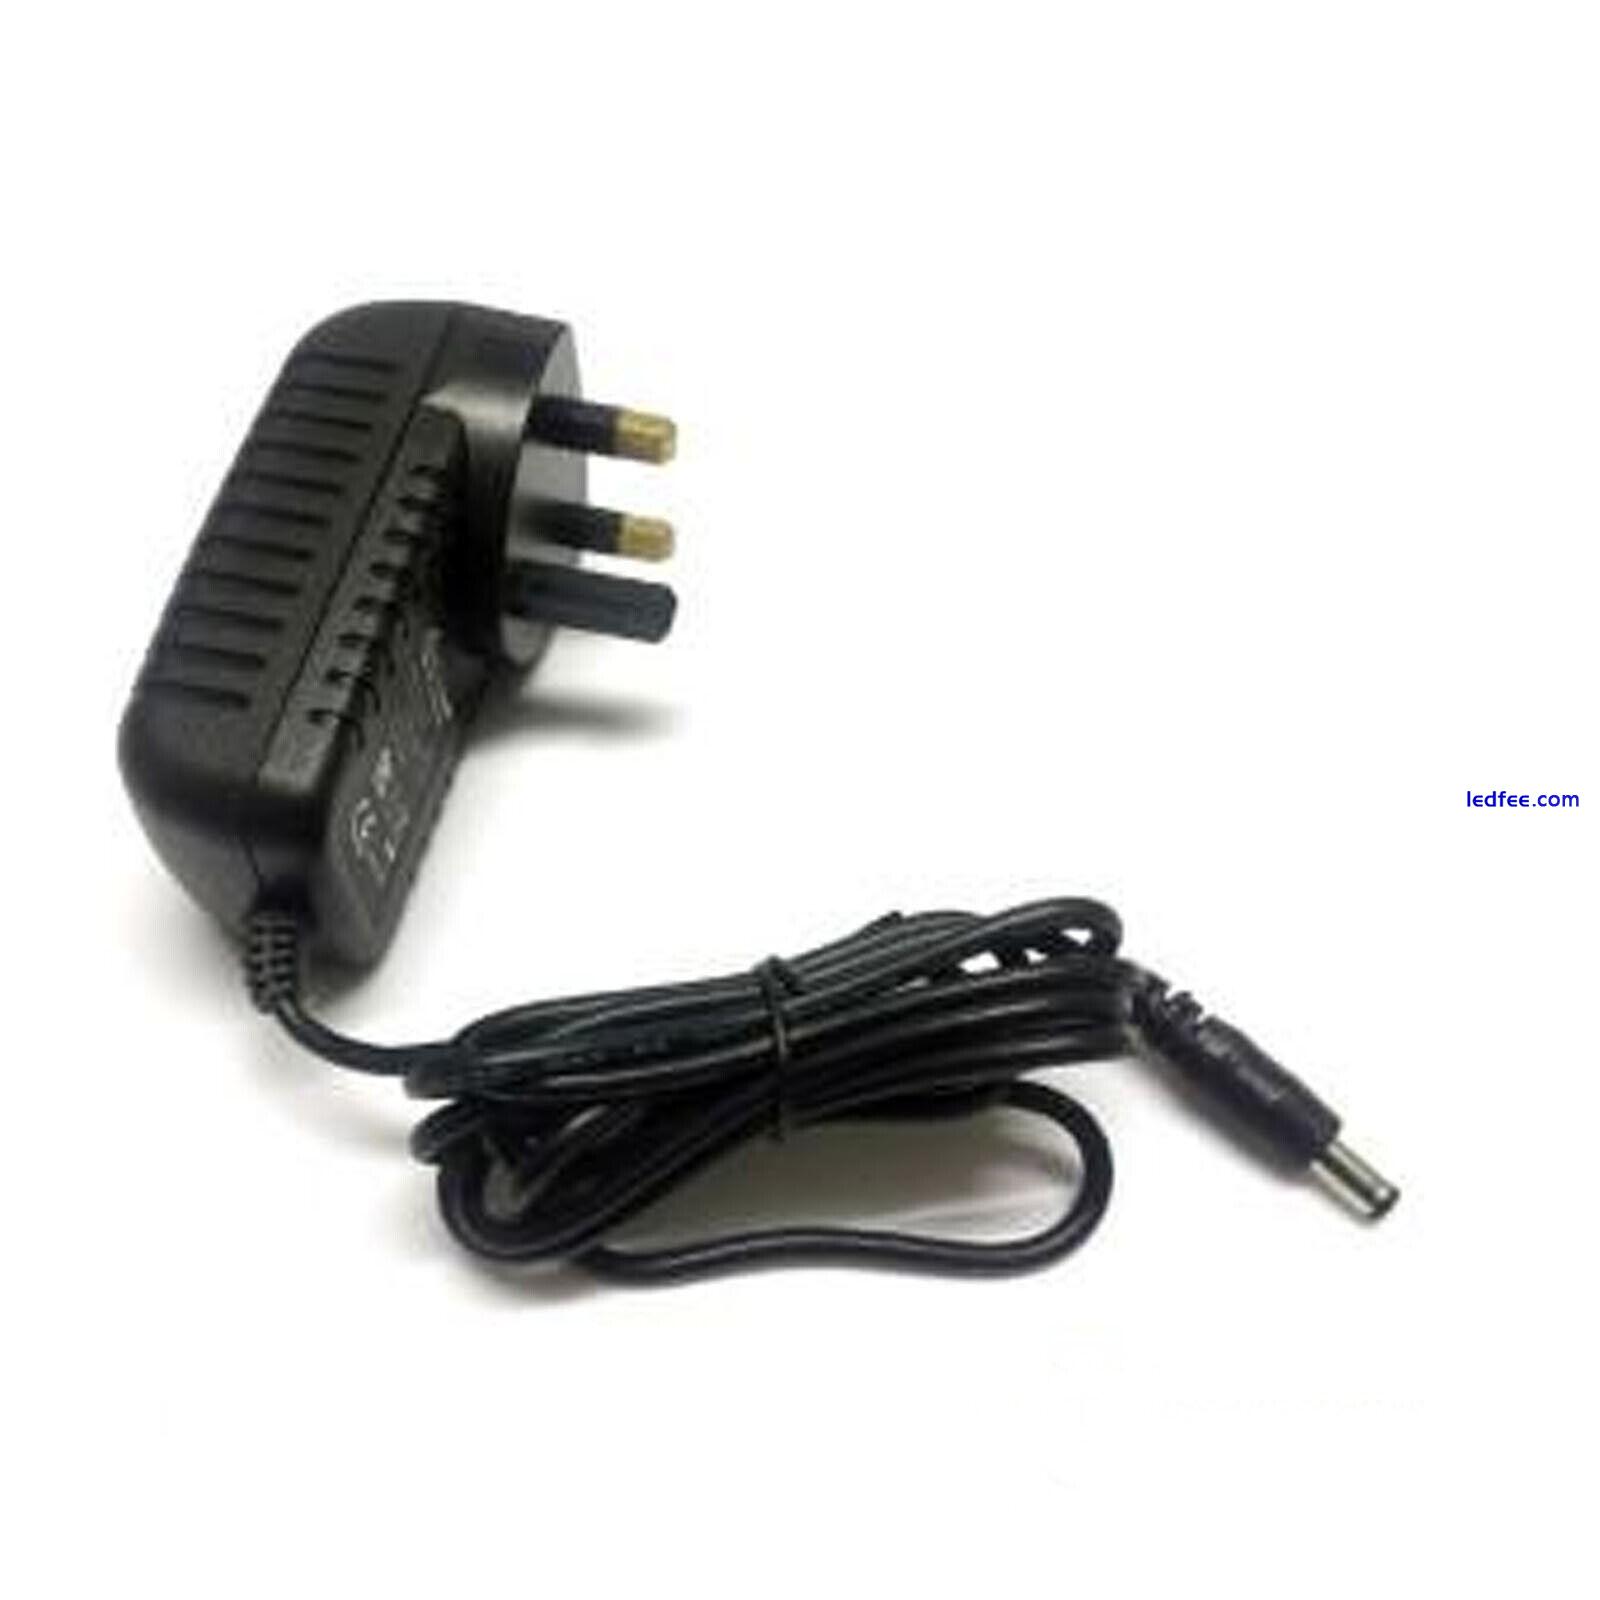 12V 1A DC UK Plug Power Supply Adaptor Transformer for LED Strips, CCTV TV. 12W 4 